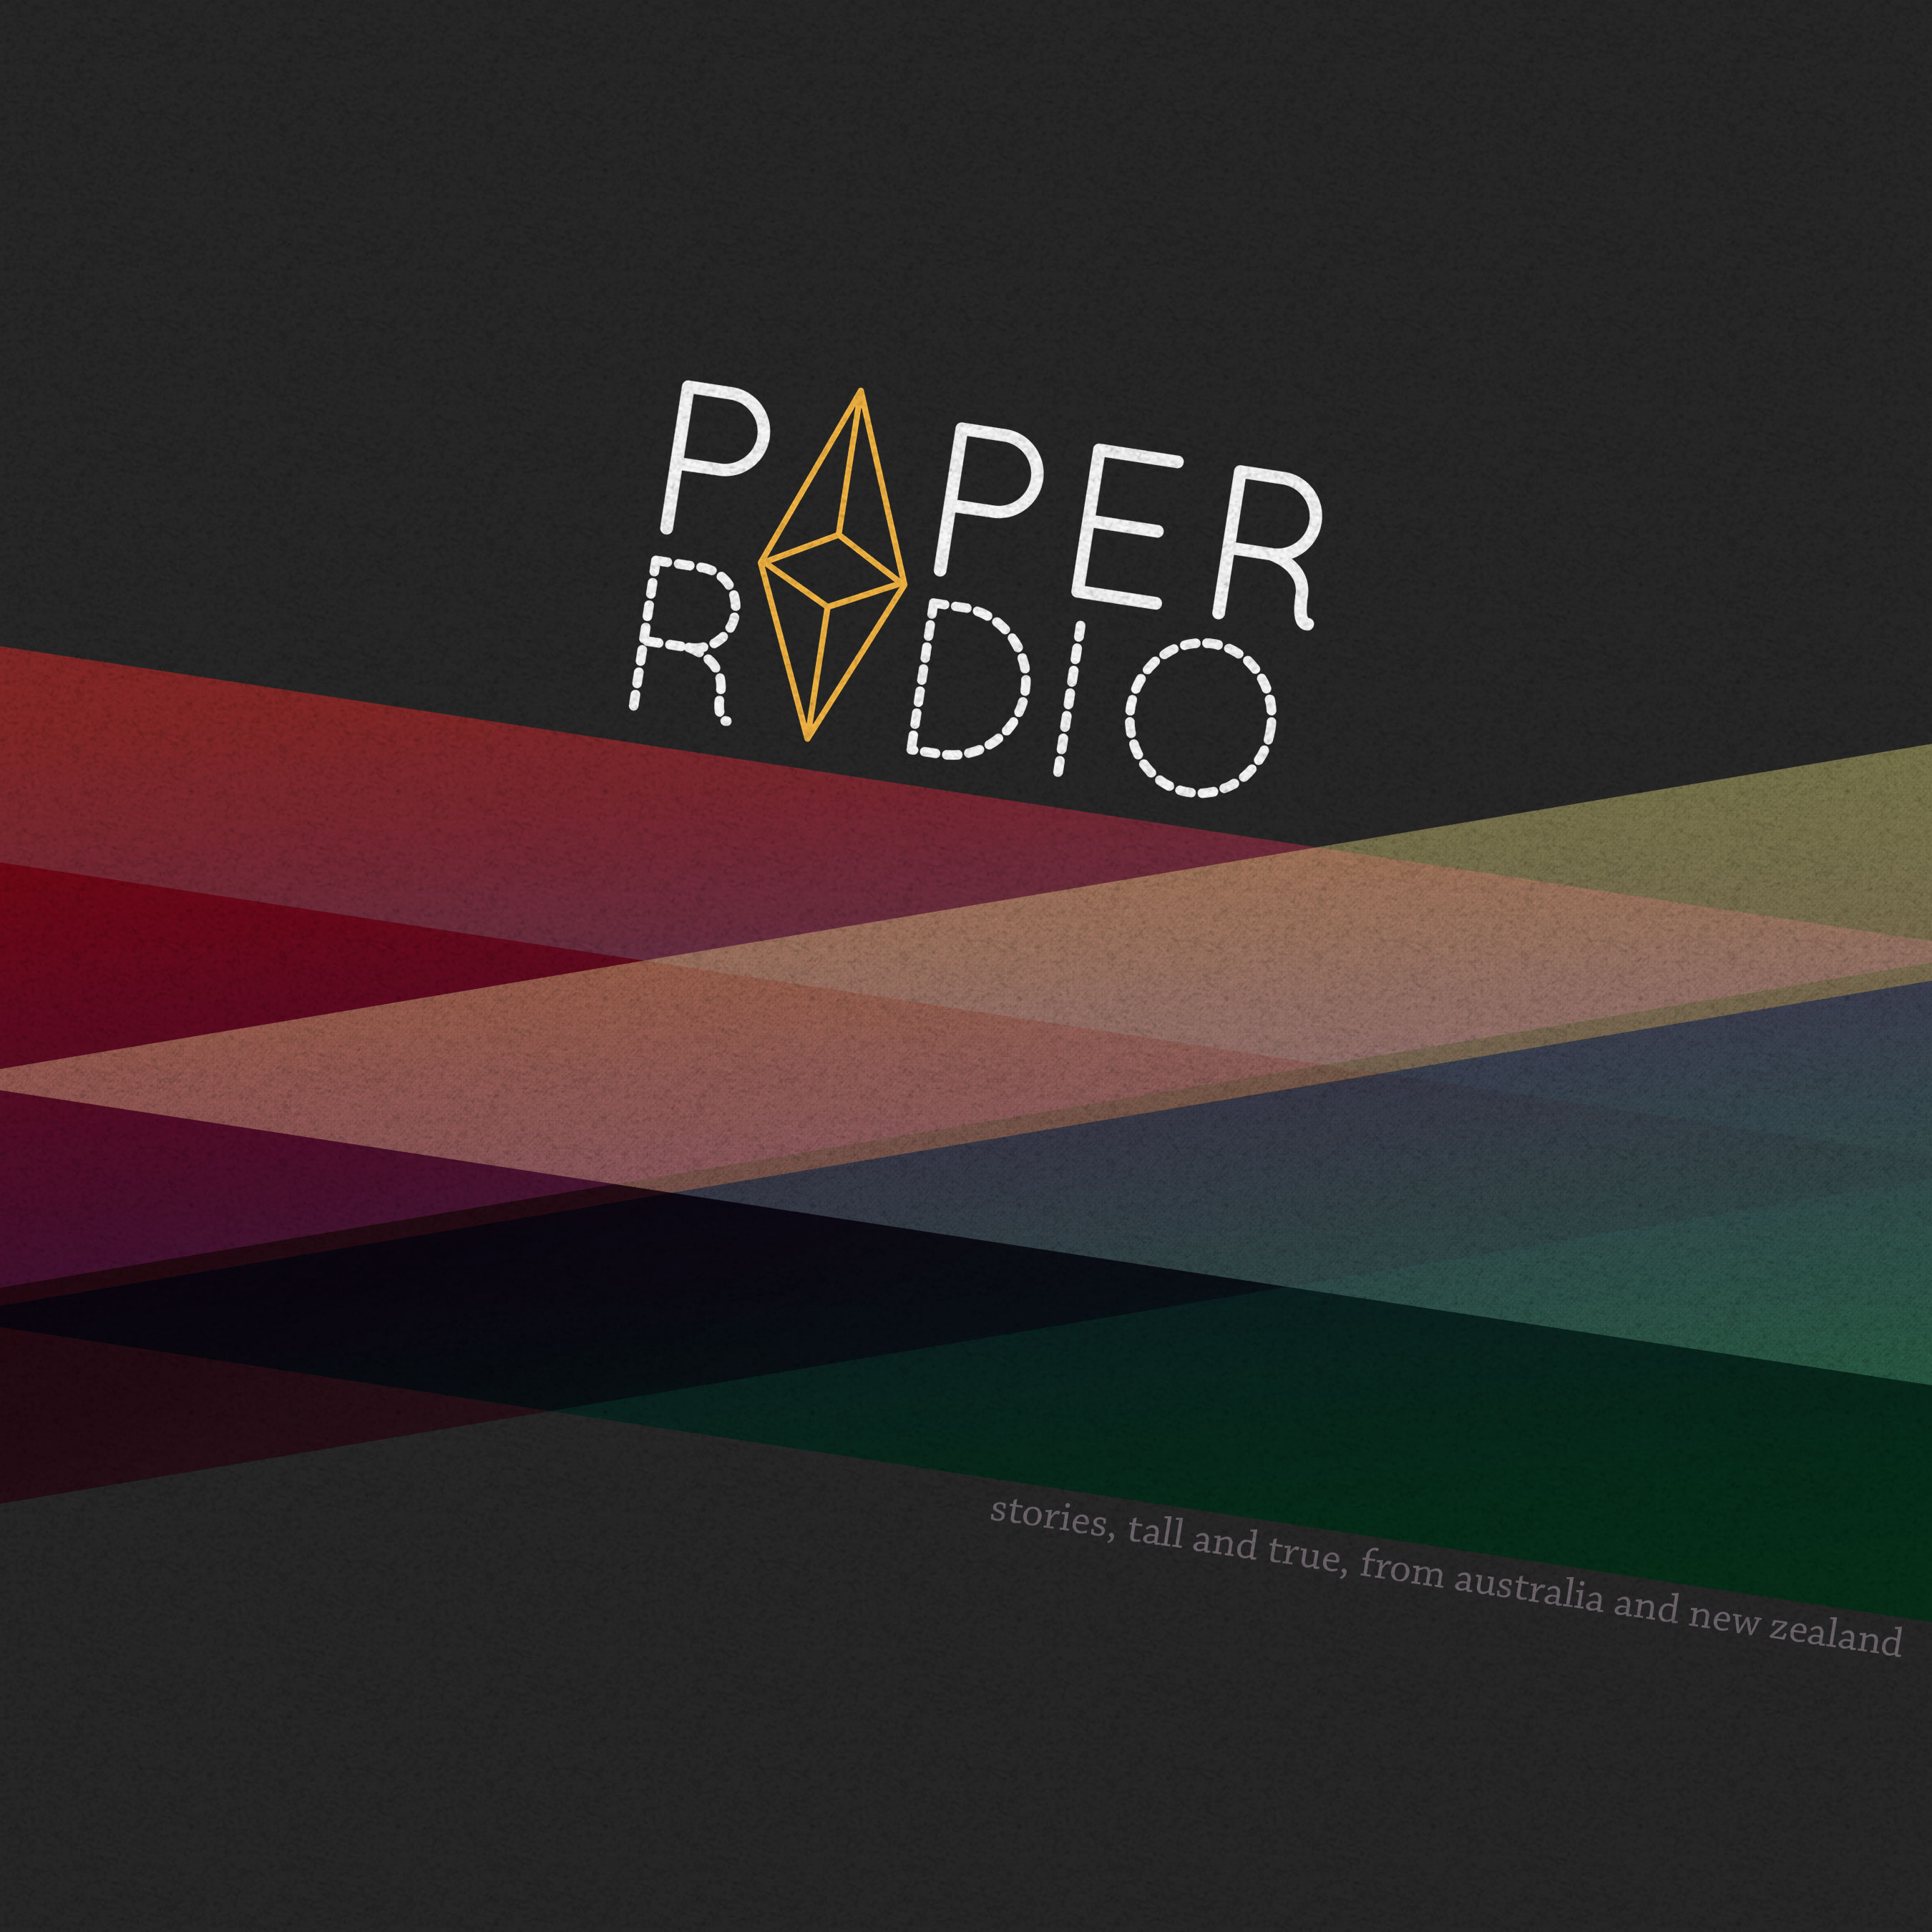 Paper Radio